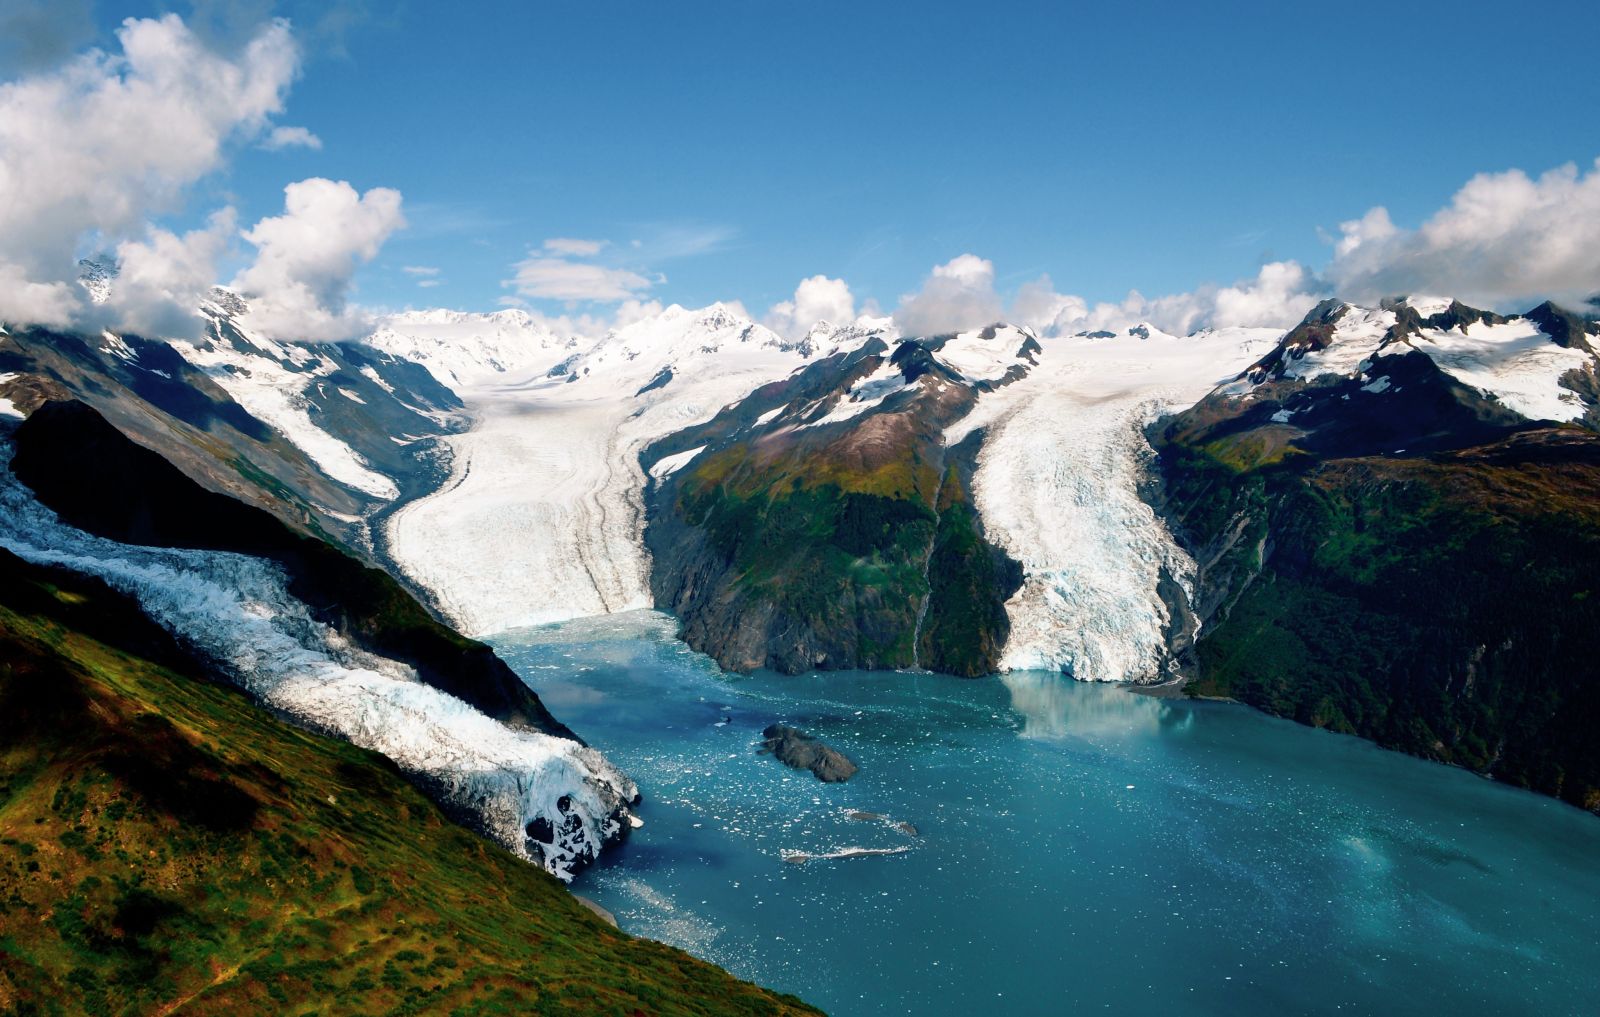 Glaciers and Prince William Sound in Alaska